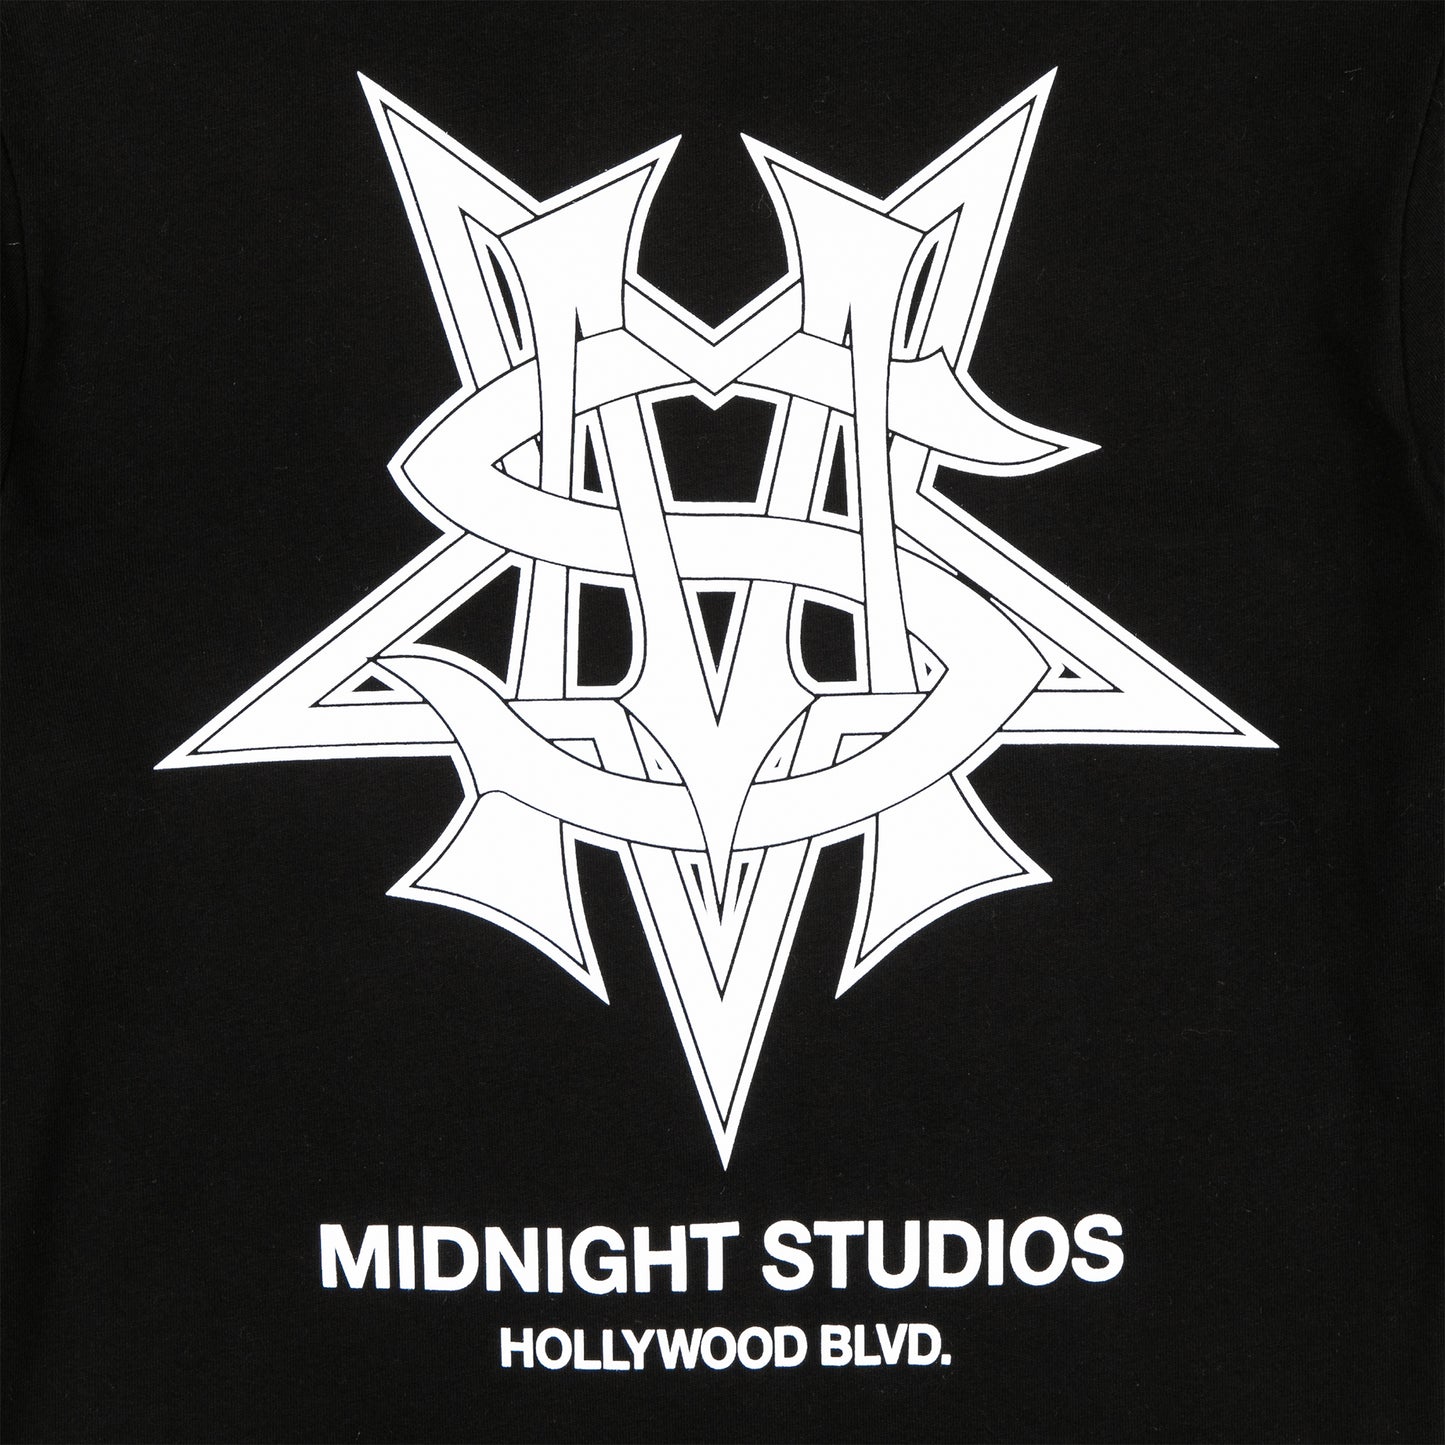 Midnight Mixed Monogram Pajama Shirt - Men - OBSOLETES DO NOT